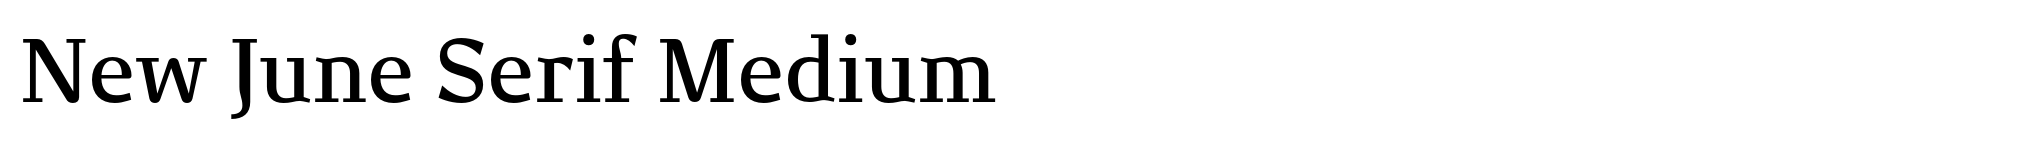 New June Serif Medium image